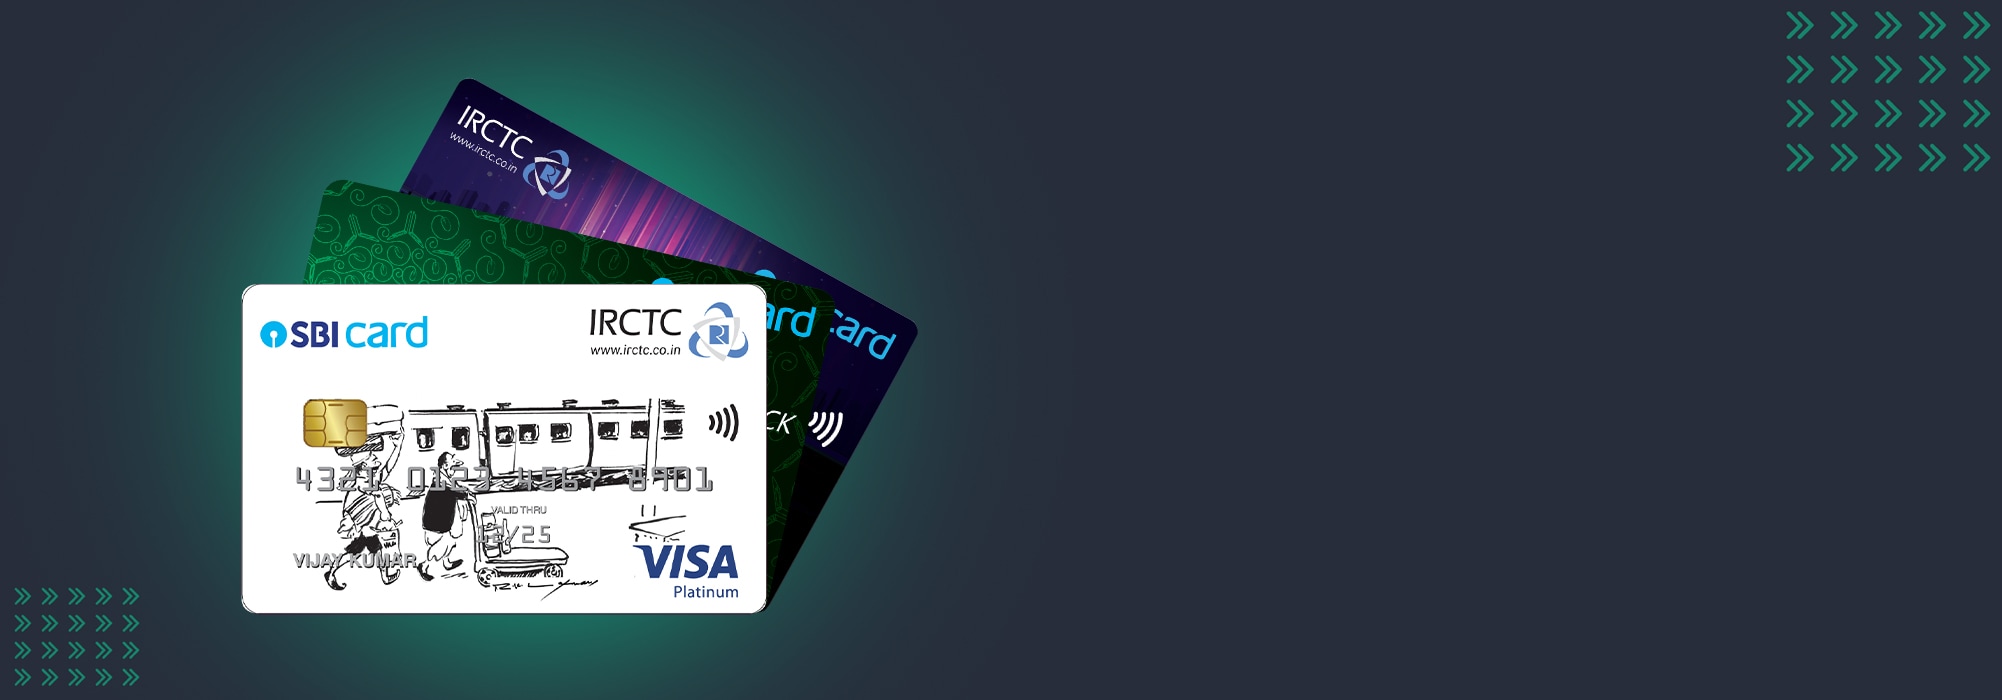 SimplyCLICK Credit Card Benefits